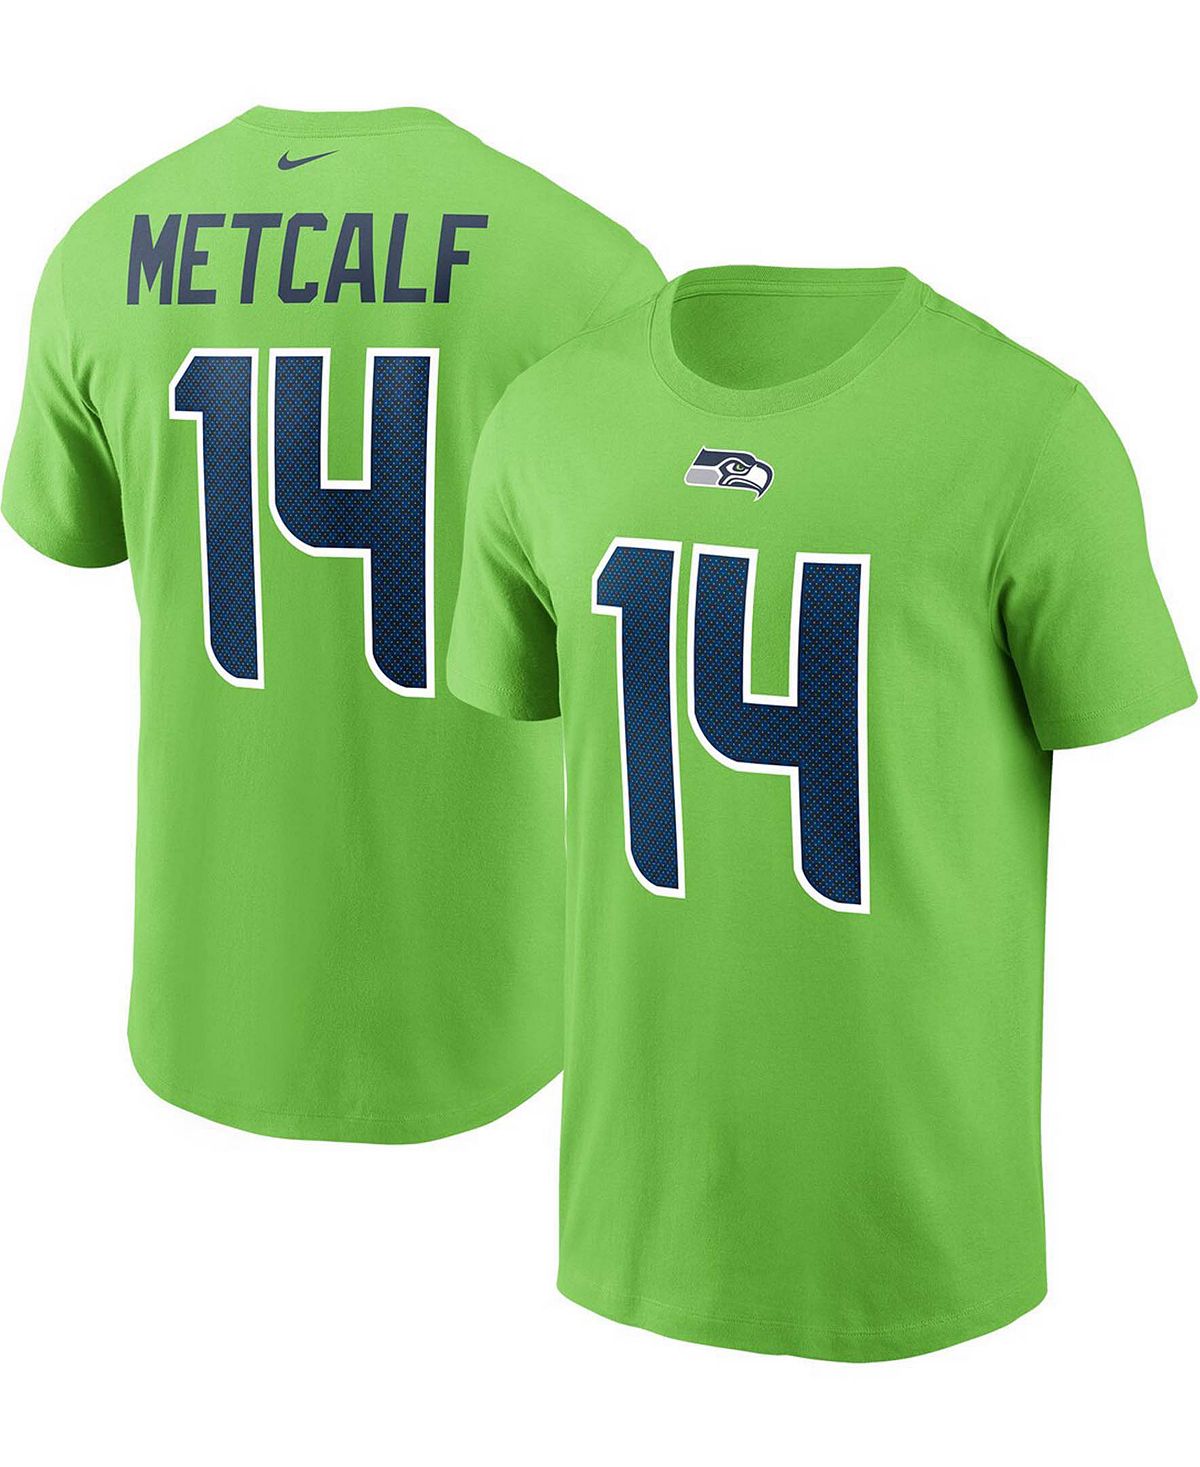 Мужская футболка DK Metcalf Neon Green Seattle Seahawks с именем и номером Nike мужская футболка dk metcalf college navy seattle seahawks vapor elite player nike синий